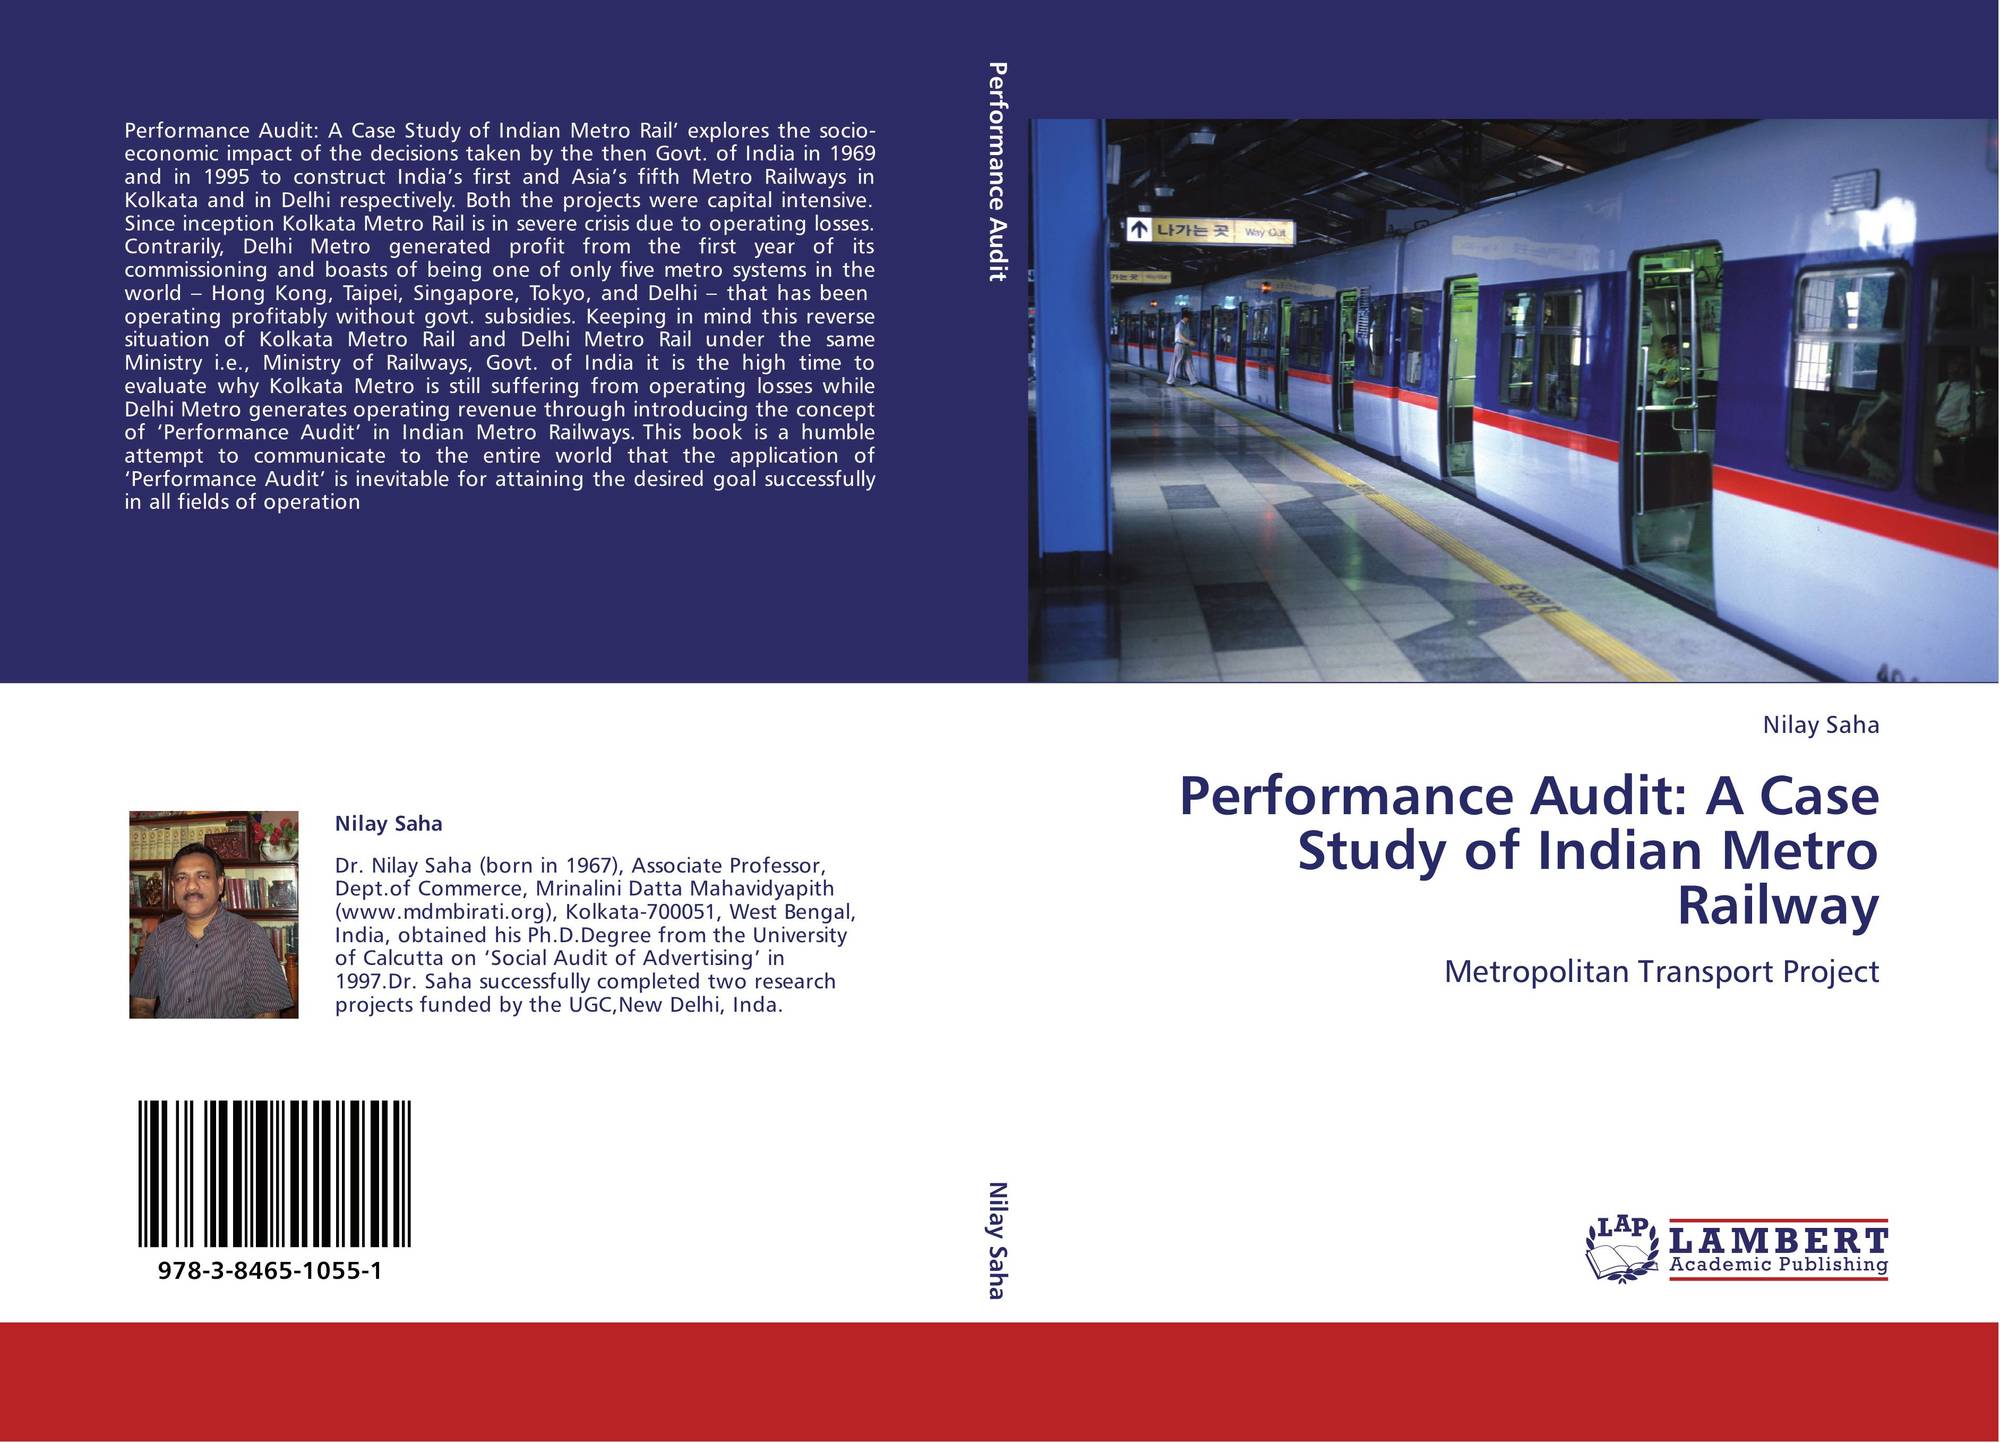 evaluation of public transport systems case study of delhi metro